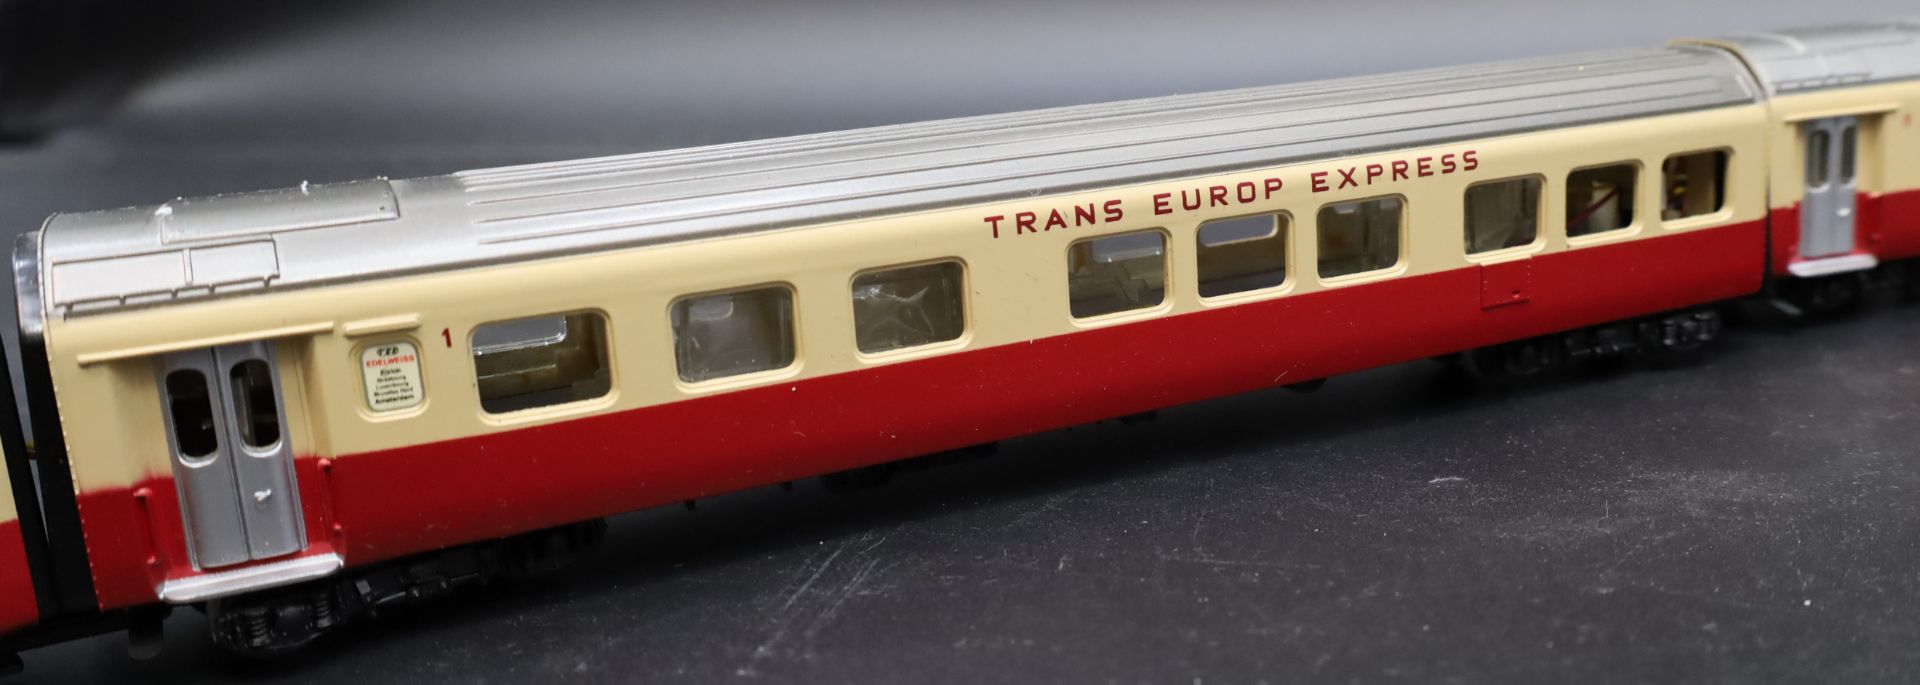 MÄRKLIN Spur H0. Trans Europ Express. Modelleisenbahn. - Bild 5 aus 11